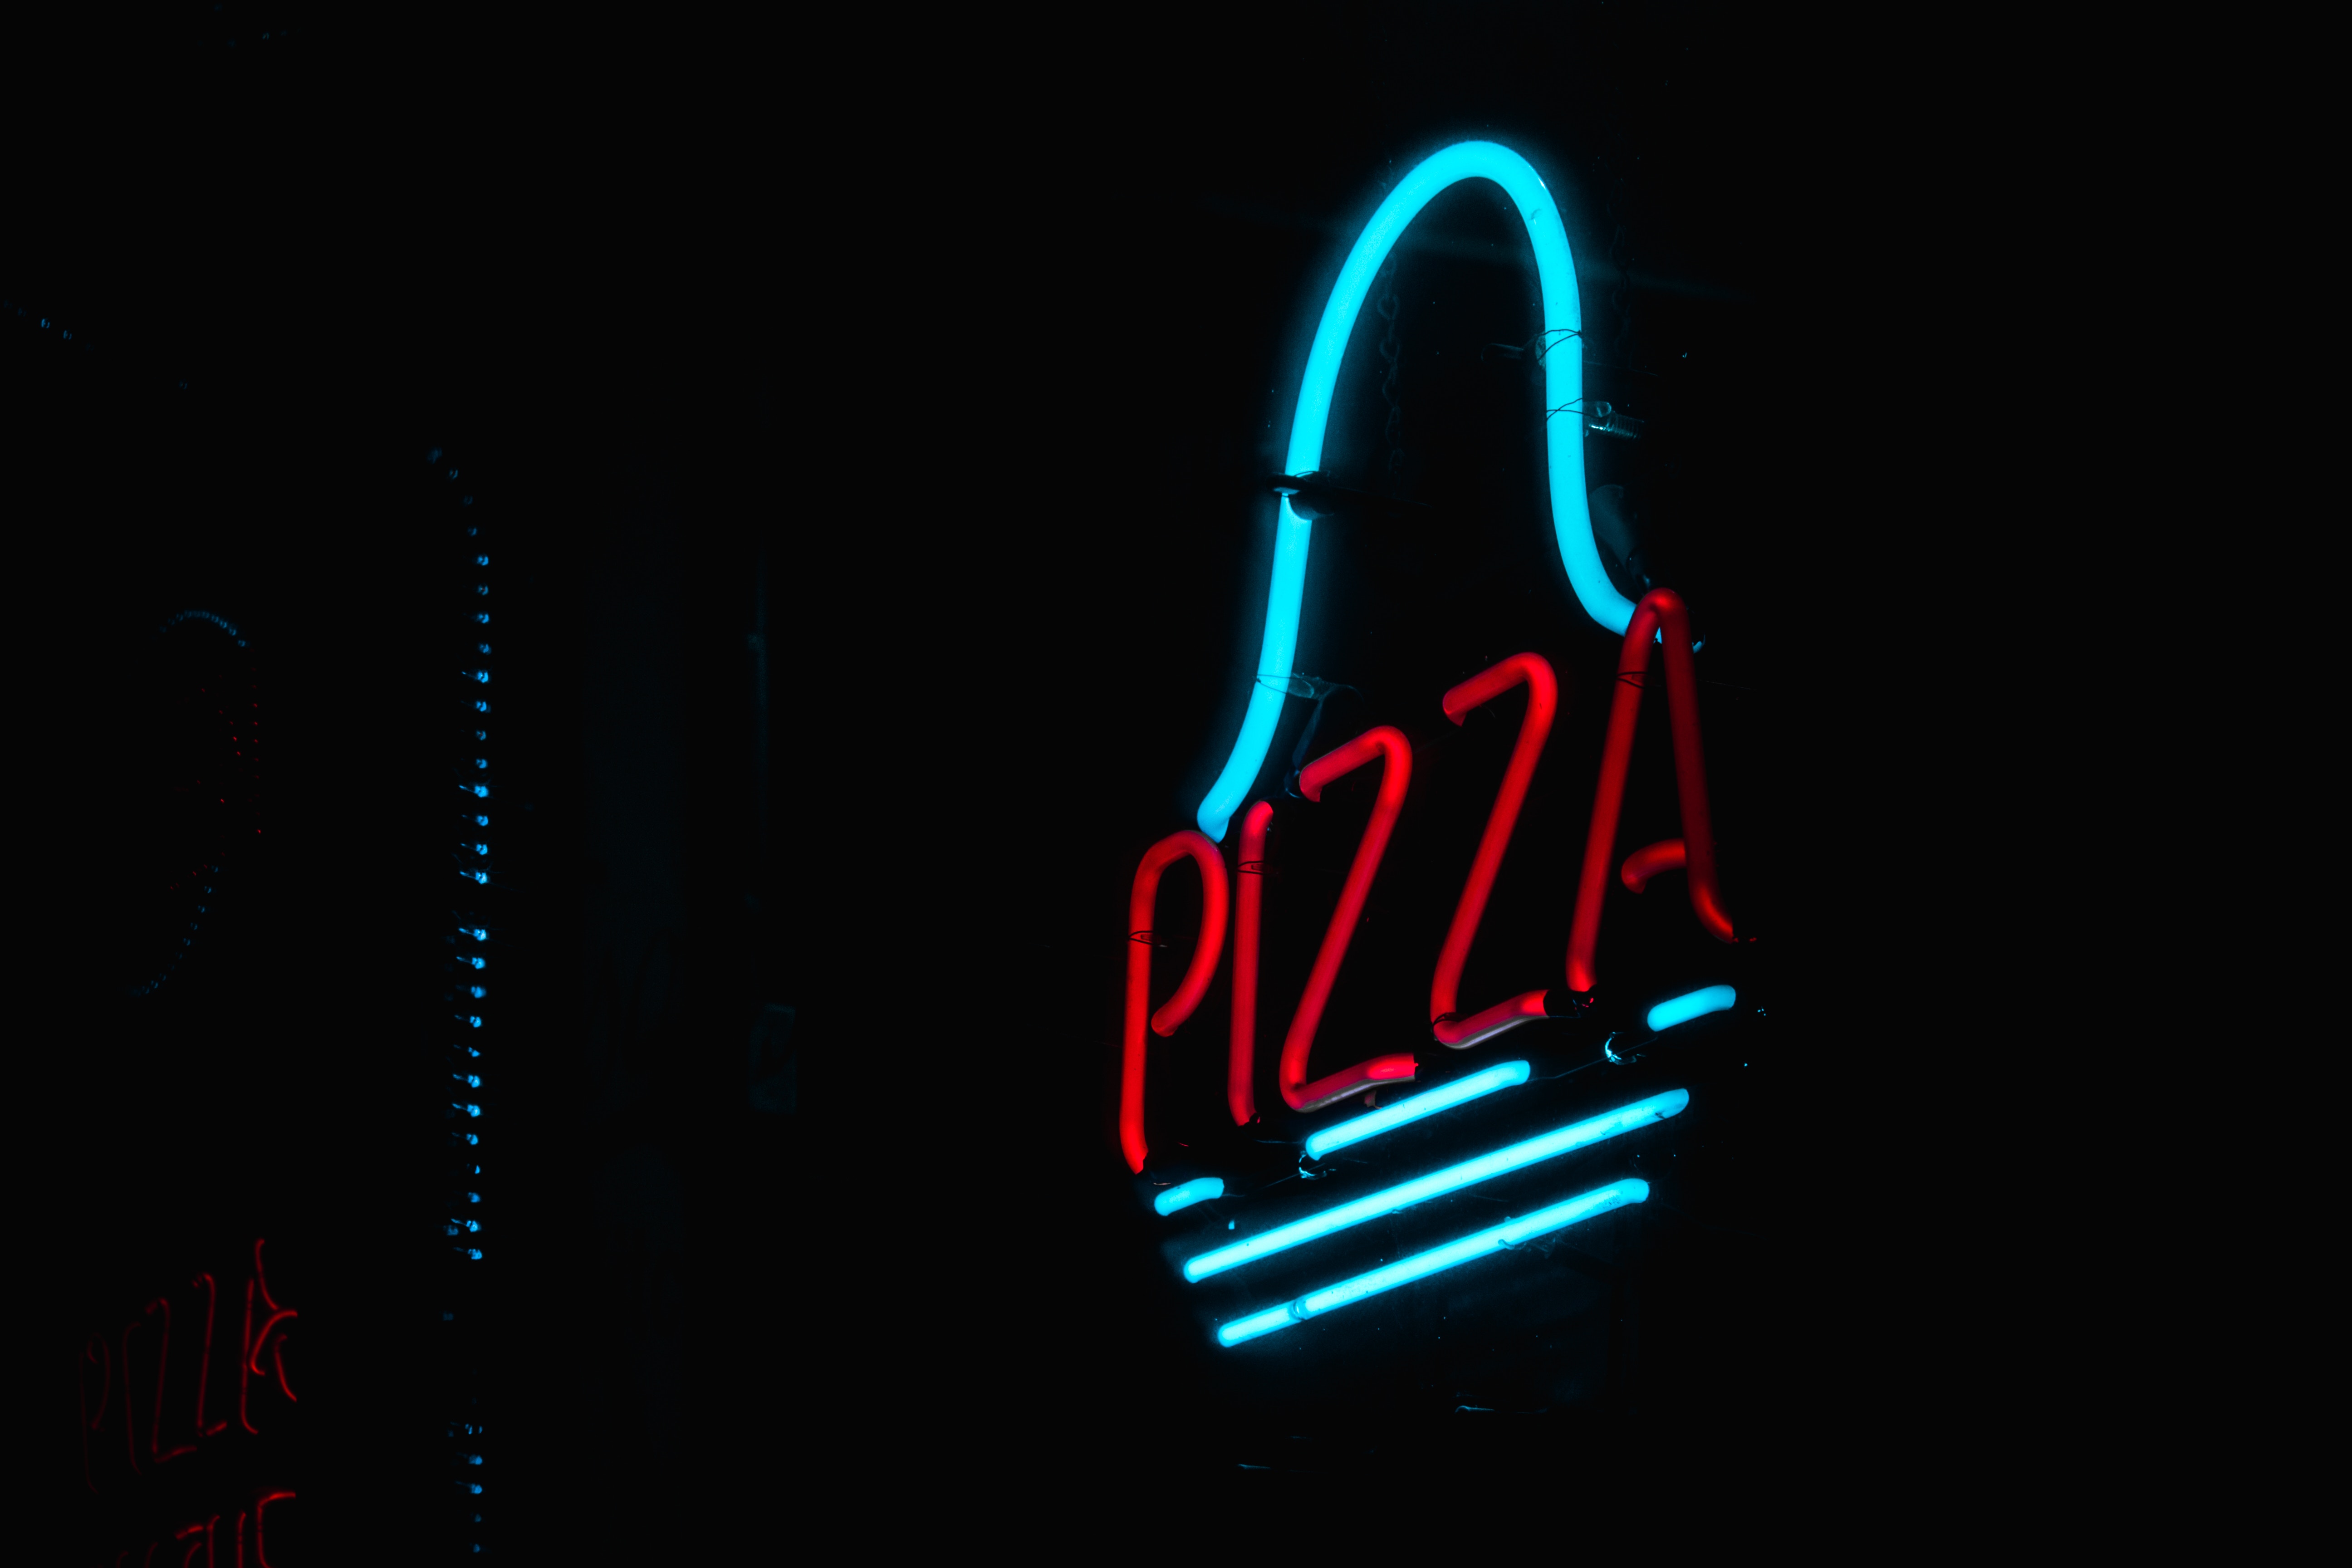 pizza, words, dark, neon, glow, sign, signboard wallpaper for mobile